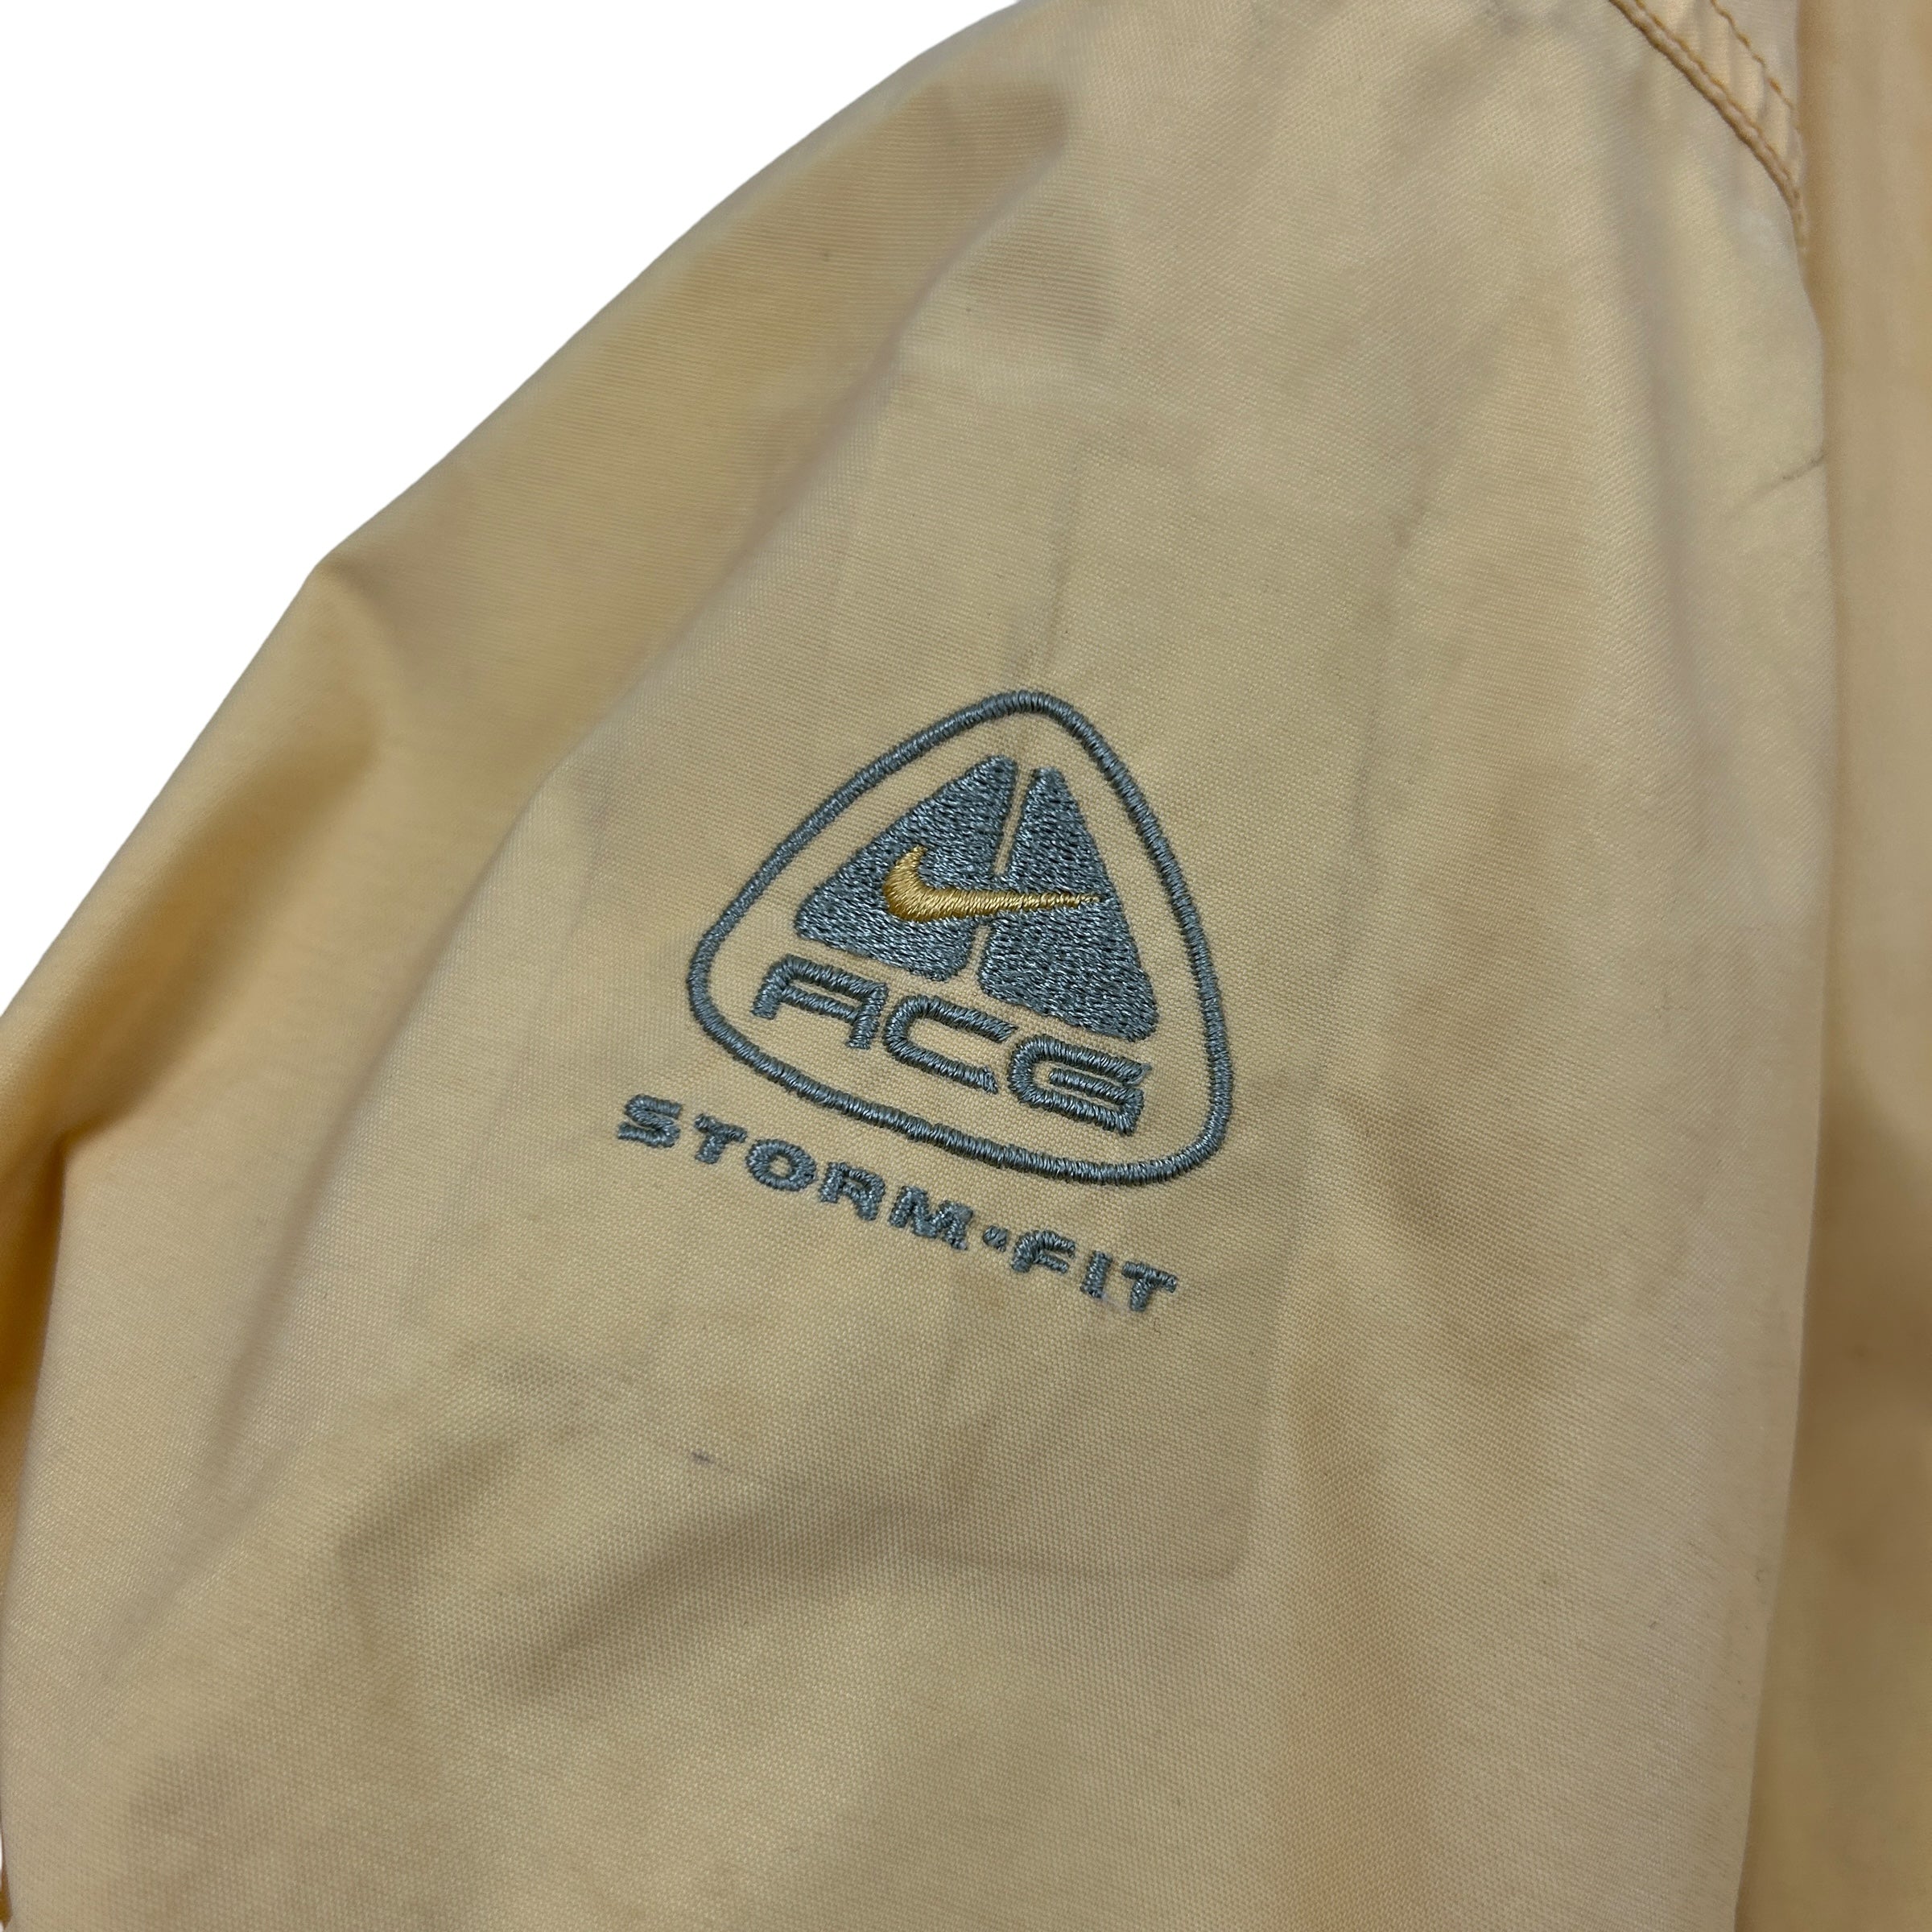 Vintage Nike ACG Storm-Fit Jacket Yellow